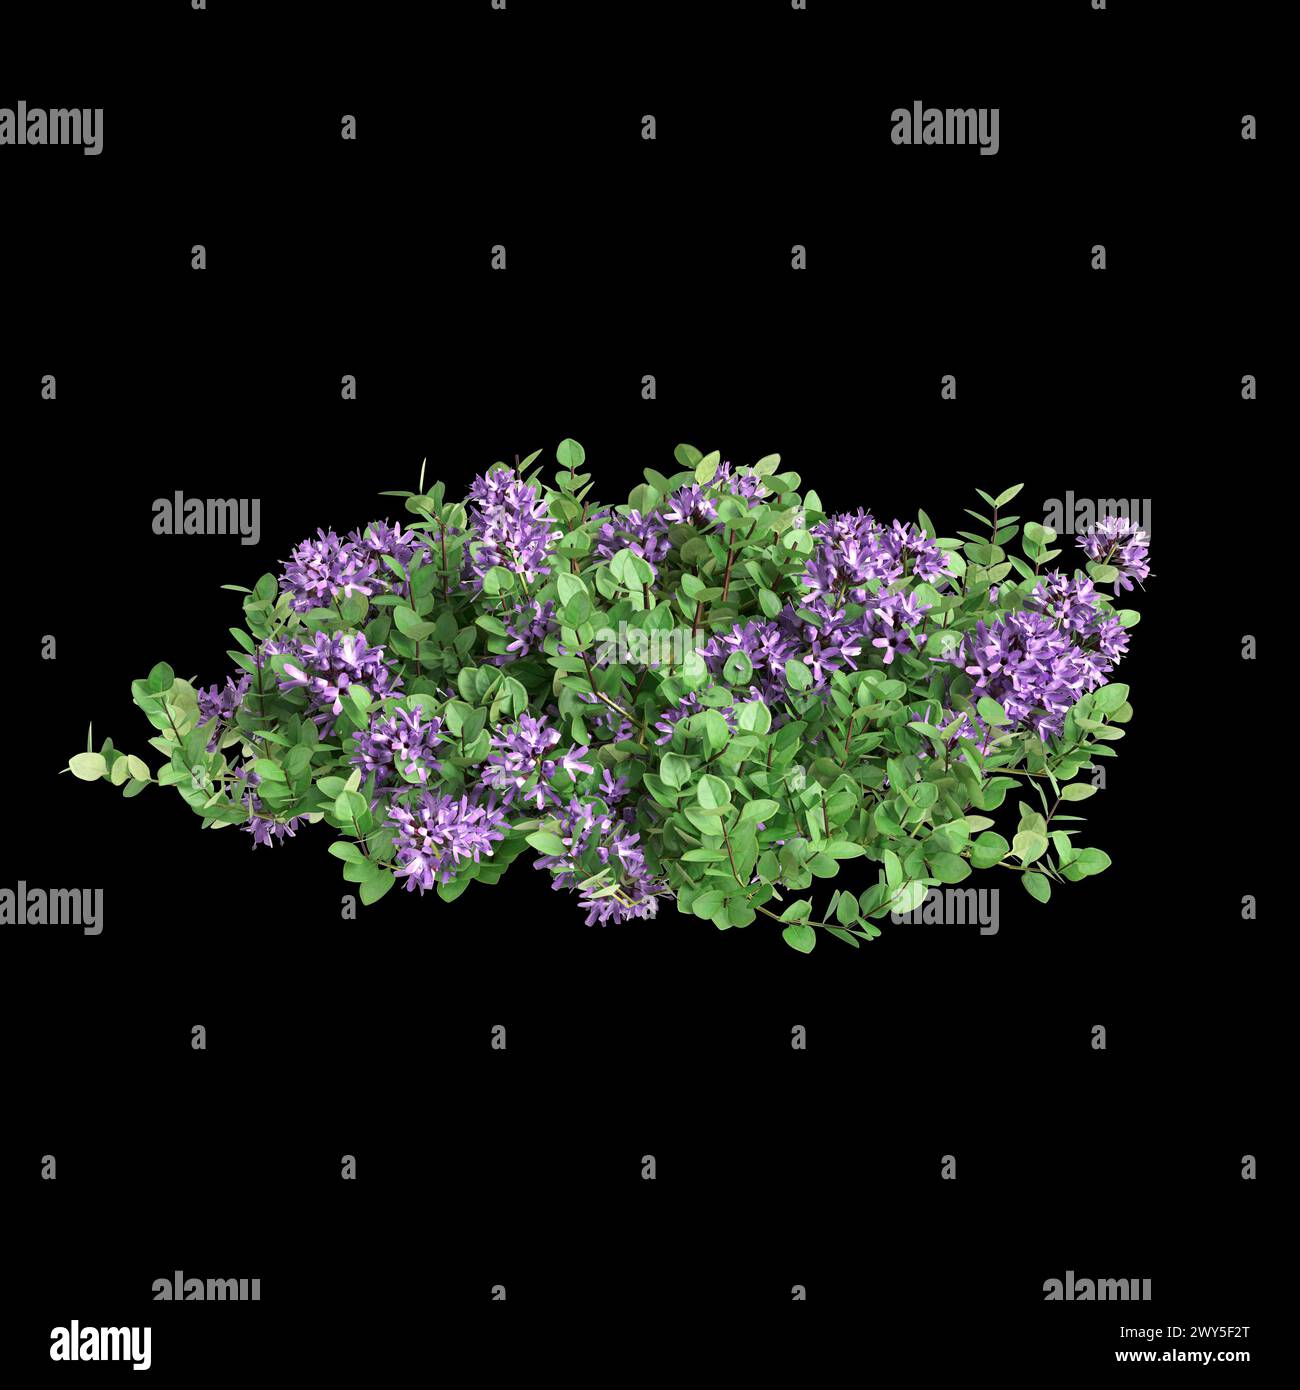 3d illustration of Thymus serpyllum bush isolated on black background Stock Photo